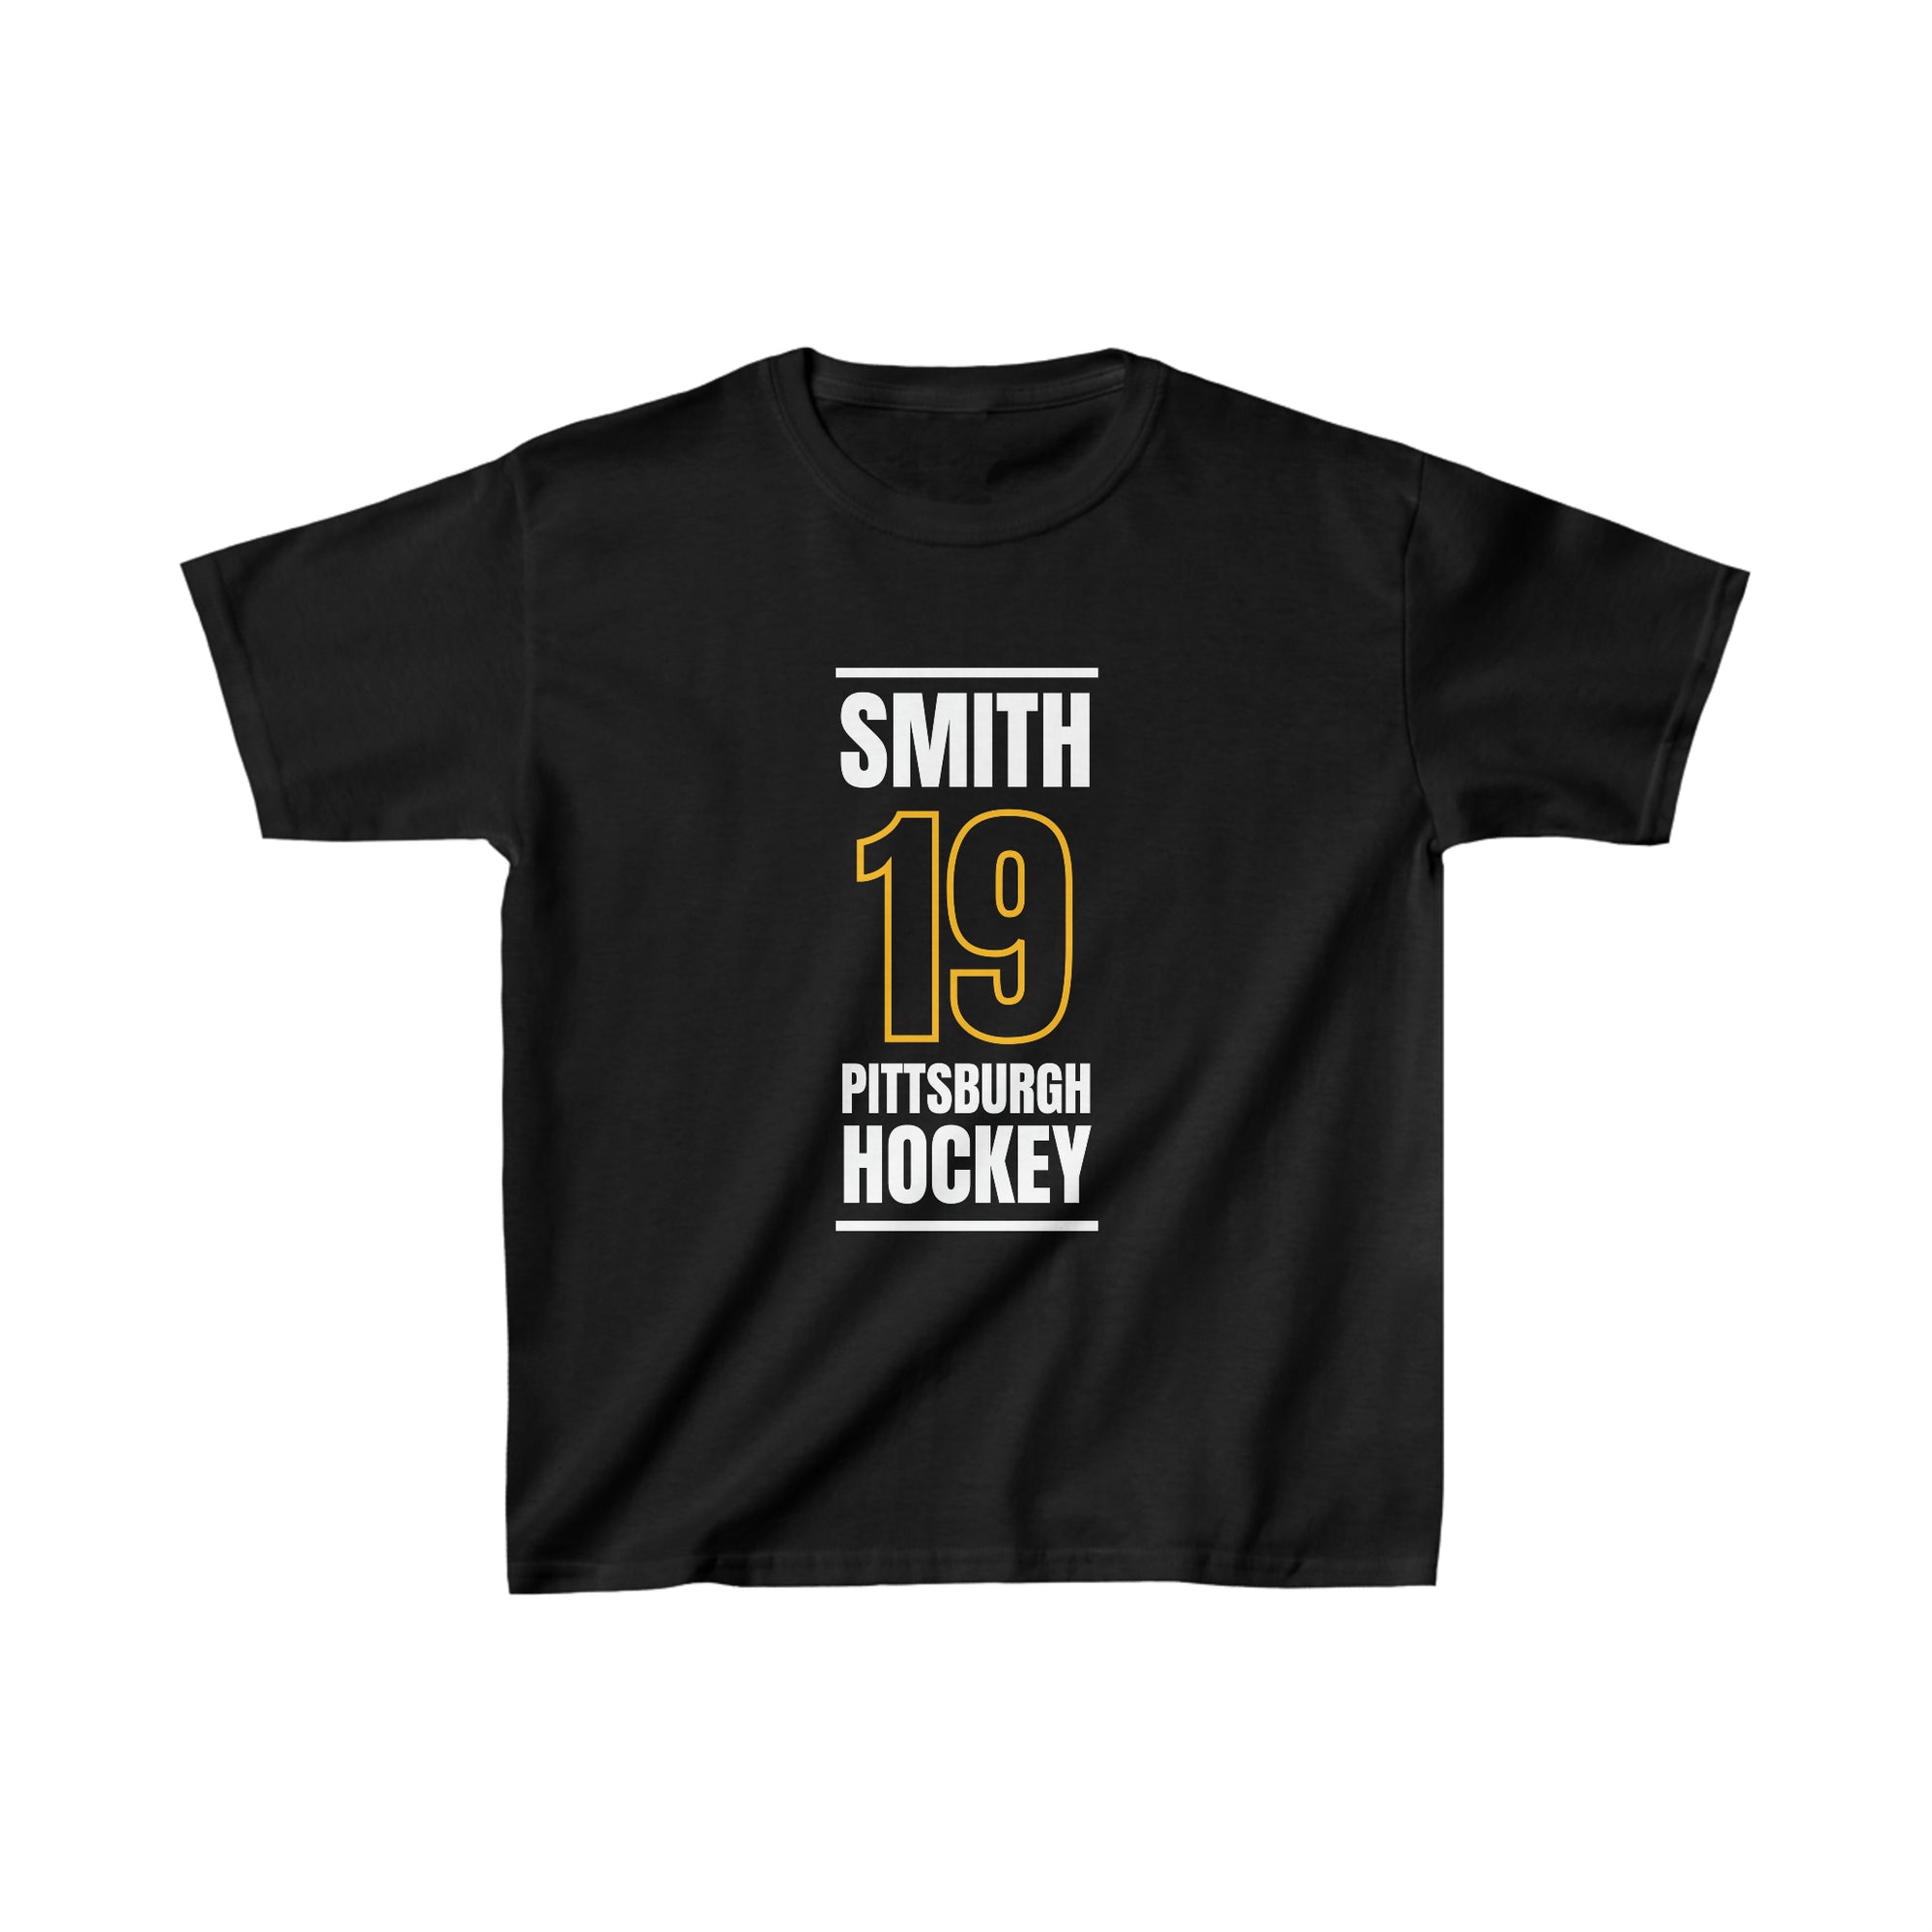 Smith 19 Pittsburgh Hockey Black Vertical Design Kids Tee